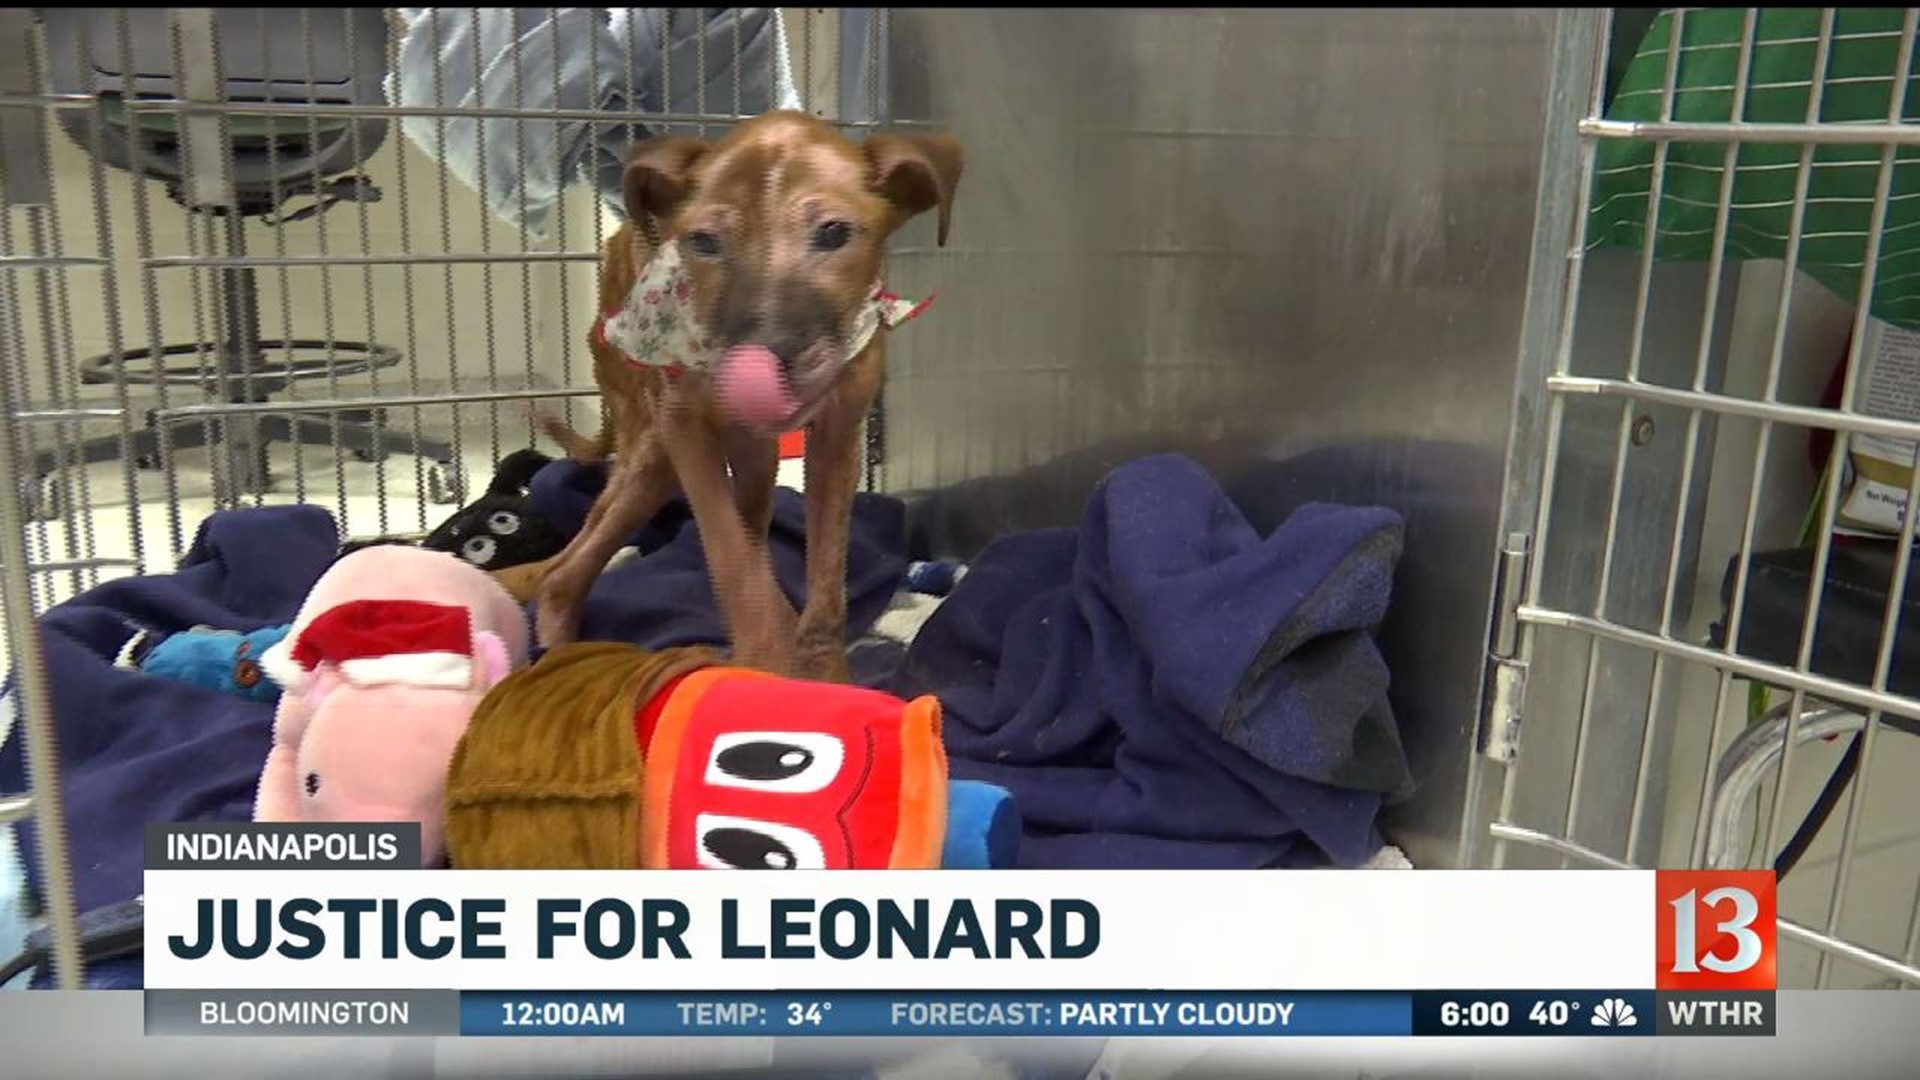 Justice for Leonard